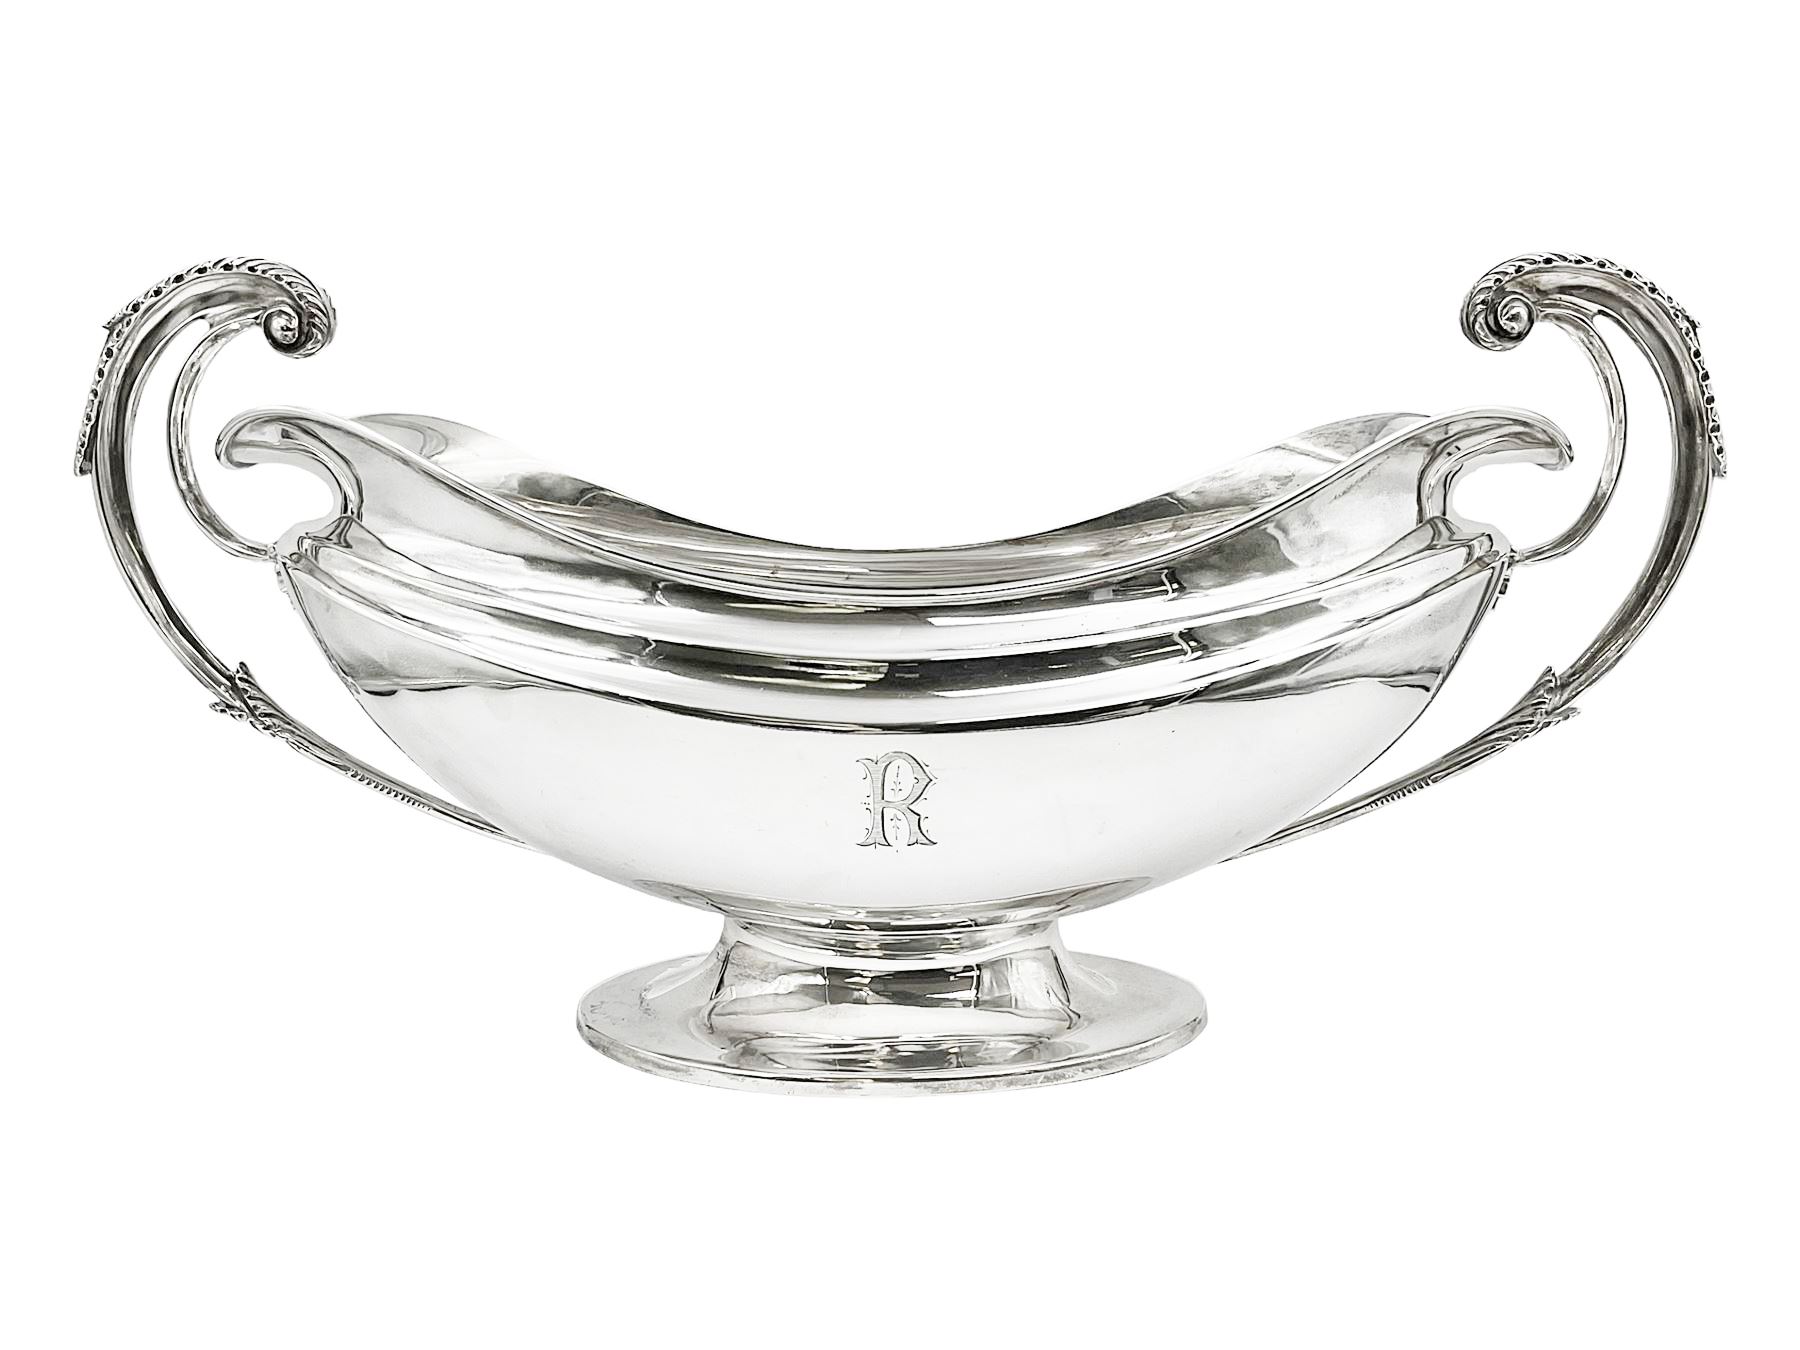 1920s silver twin-handled pedestal bowl